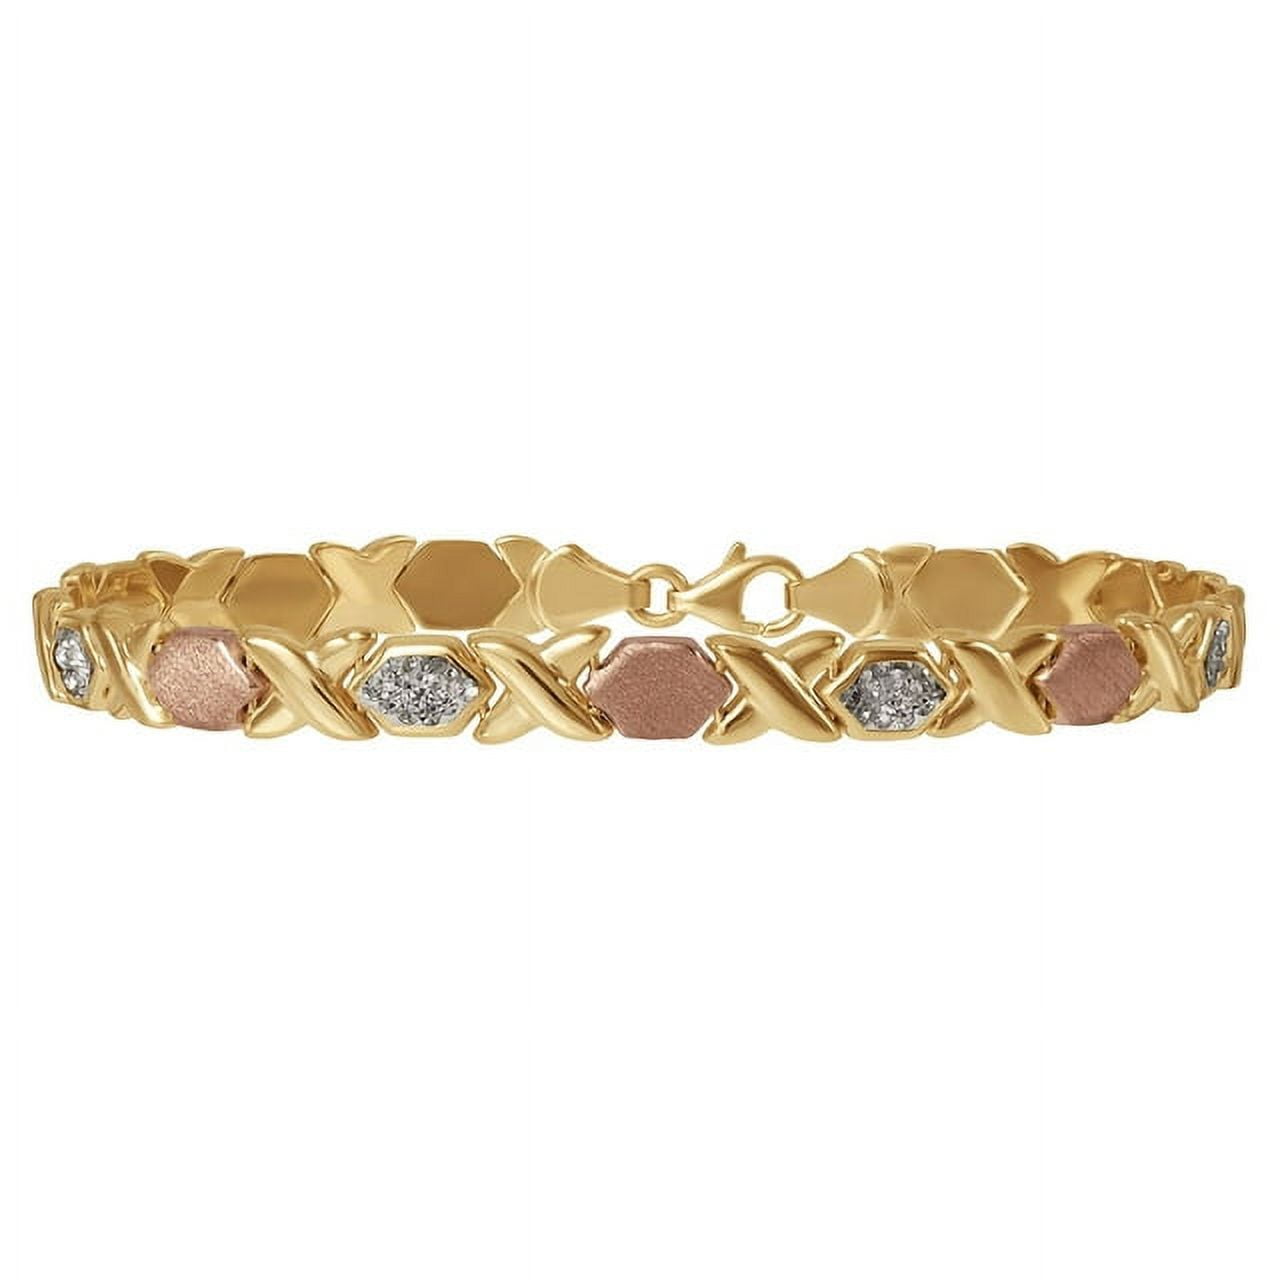 Fashion Bracelets & Charms in Womens Bracelets - Walmart.com